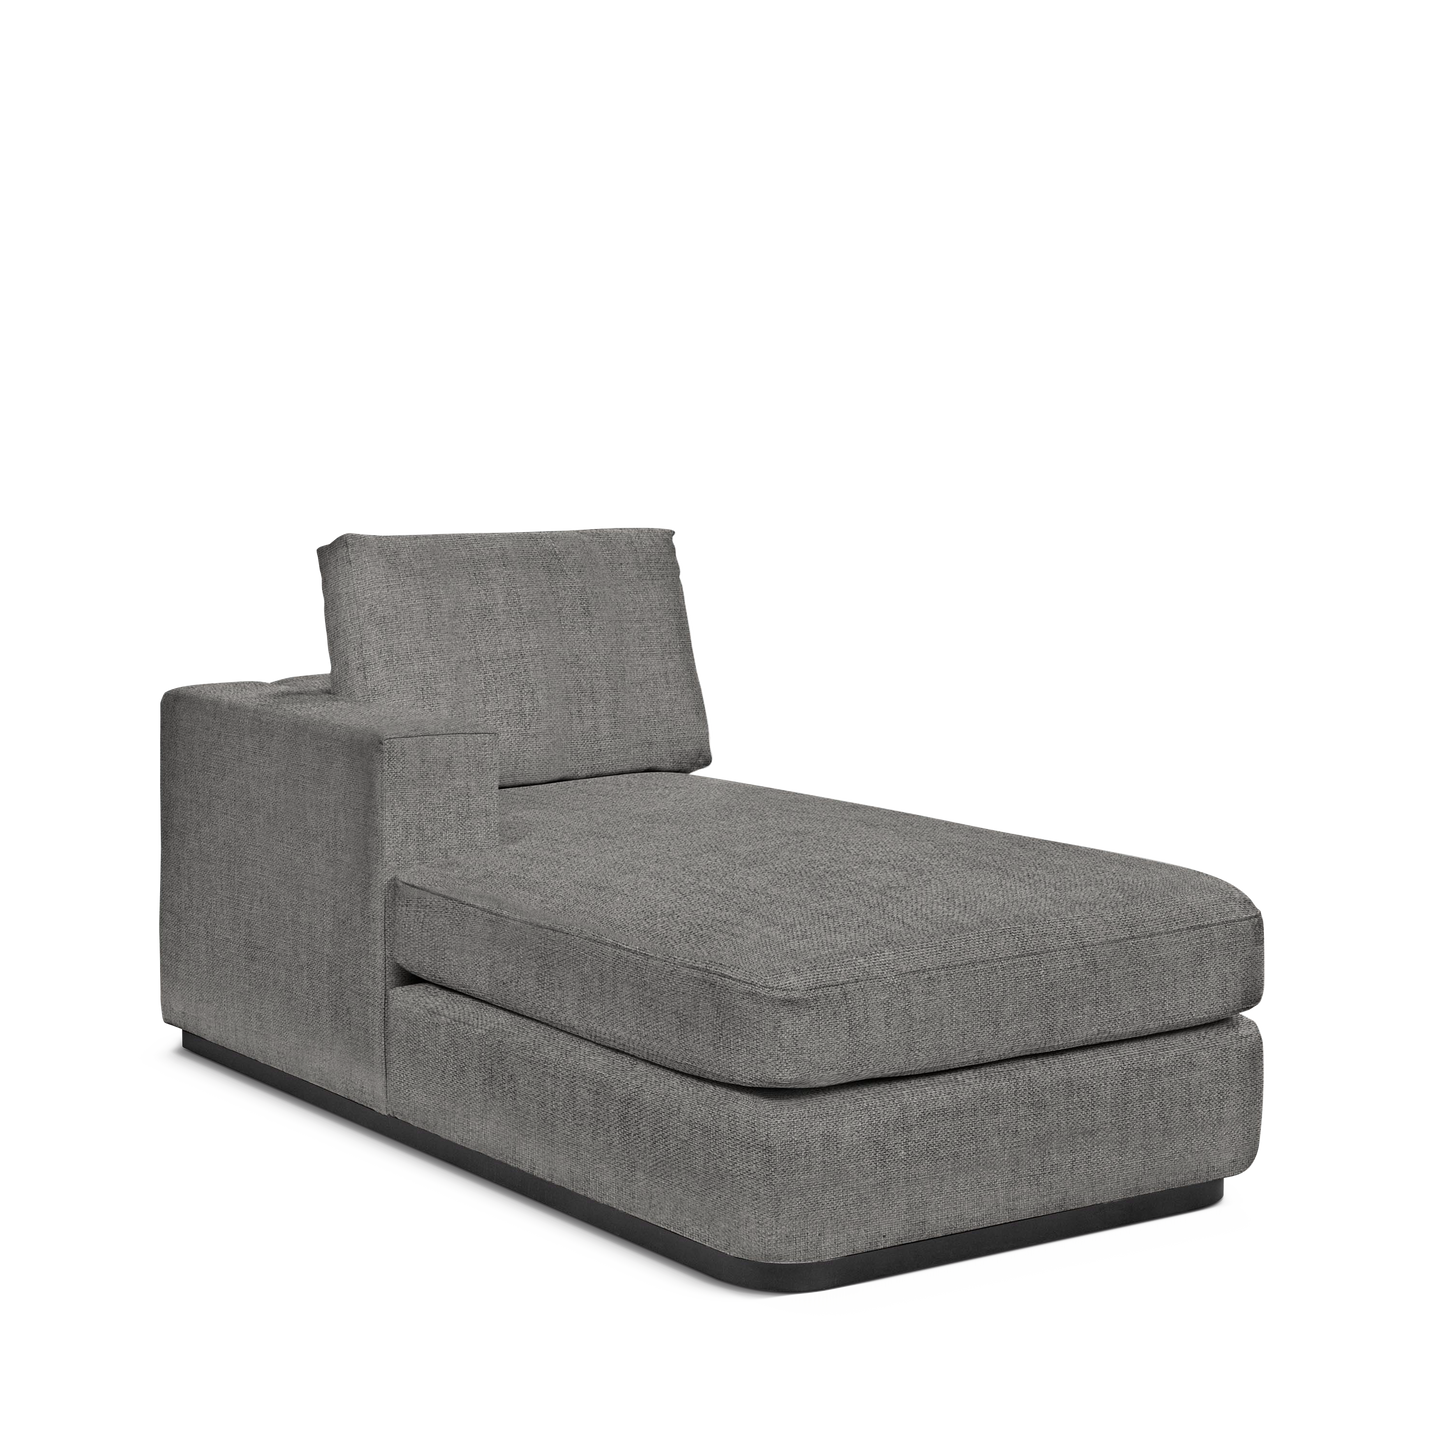 ATLAS 90 Lounge Bed arm rest left with dark grey textile